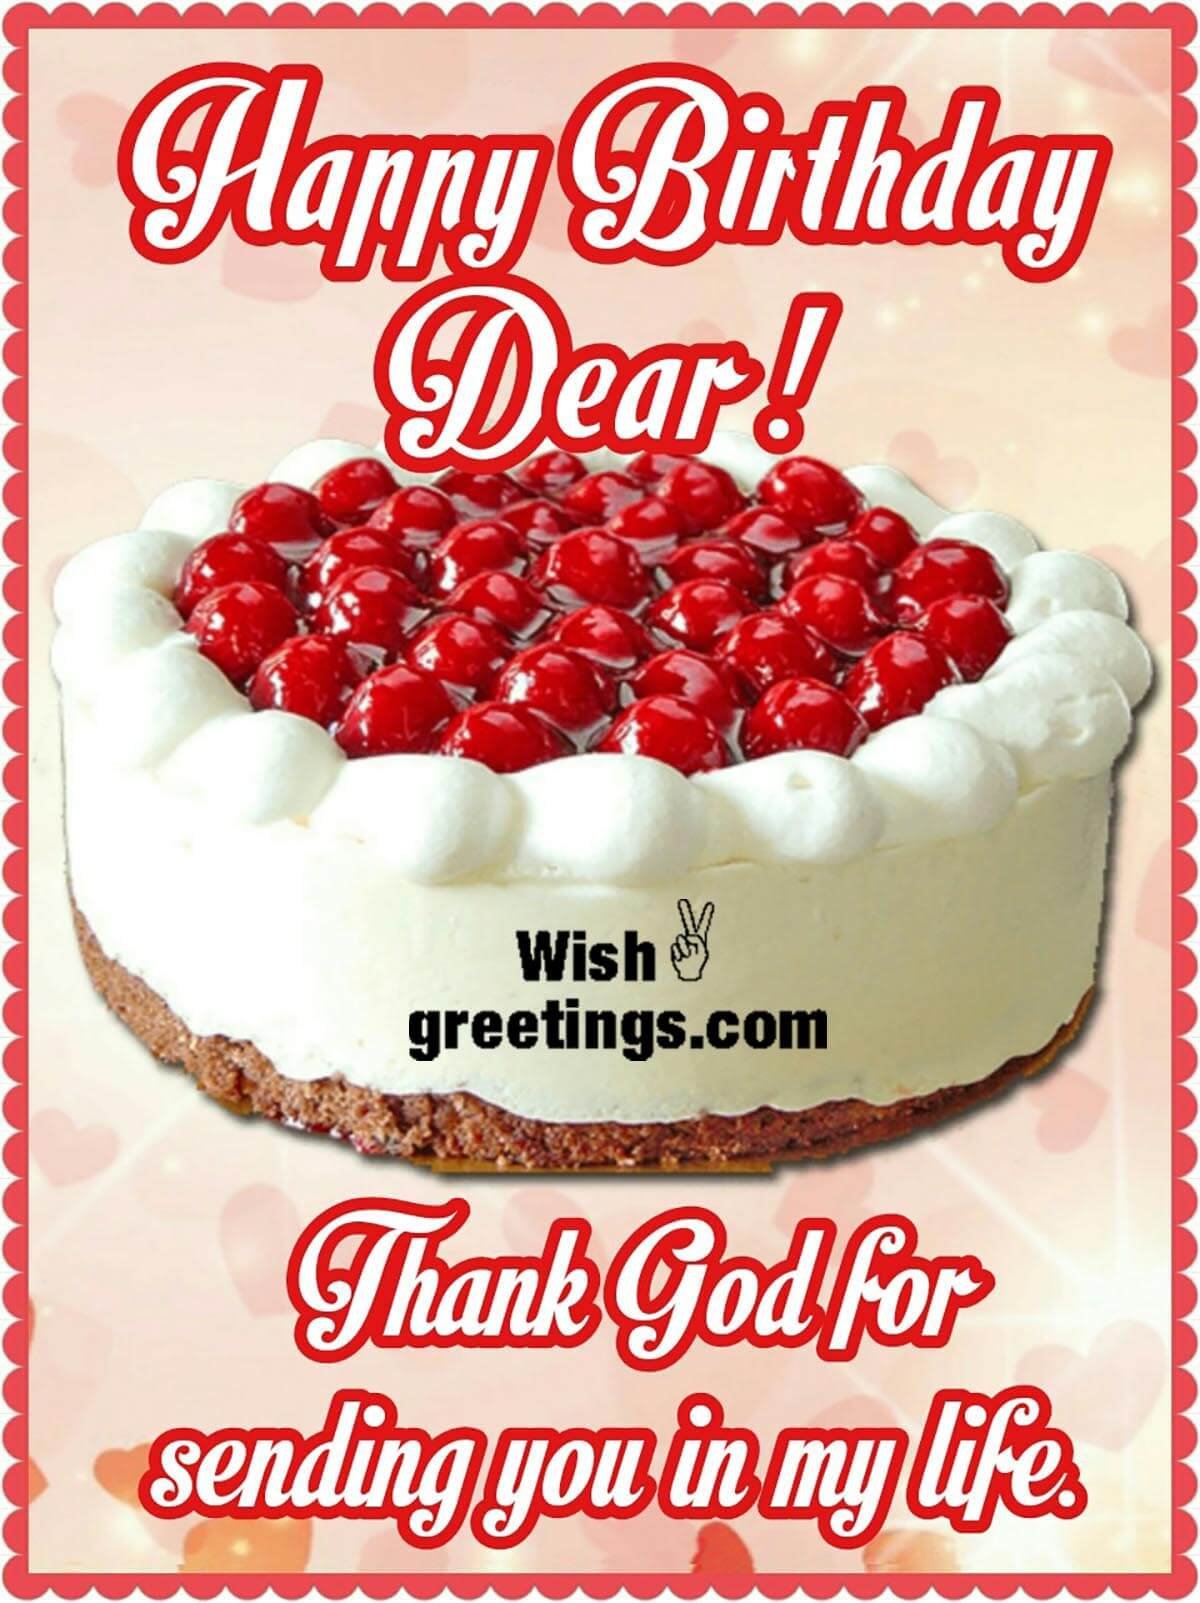 Happy Birthday Dear Cake Image